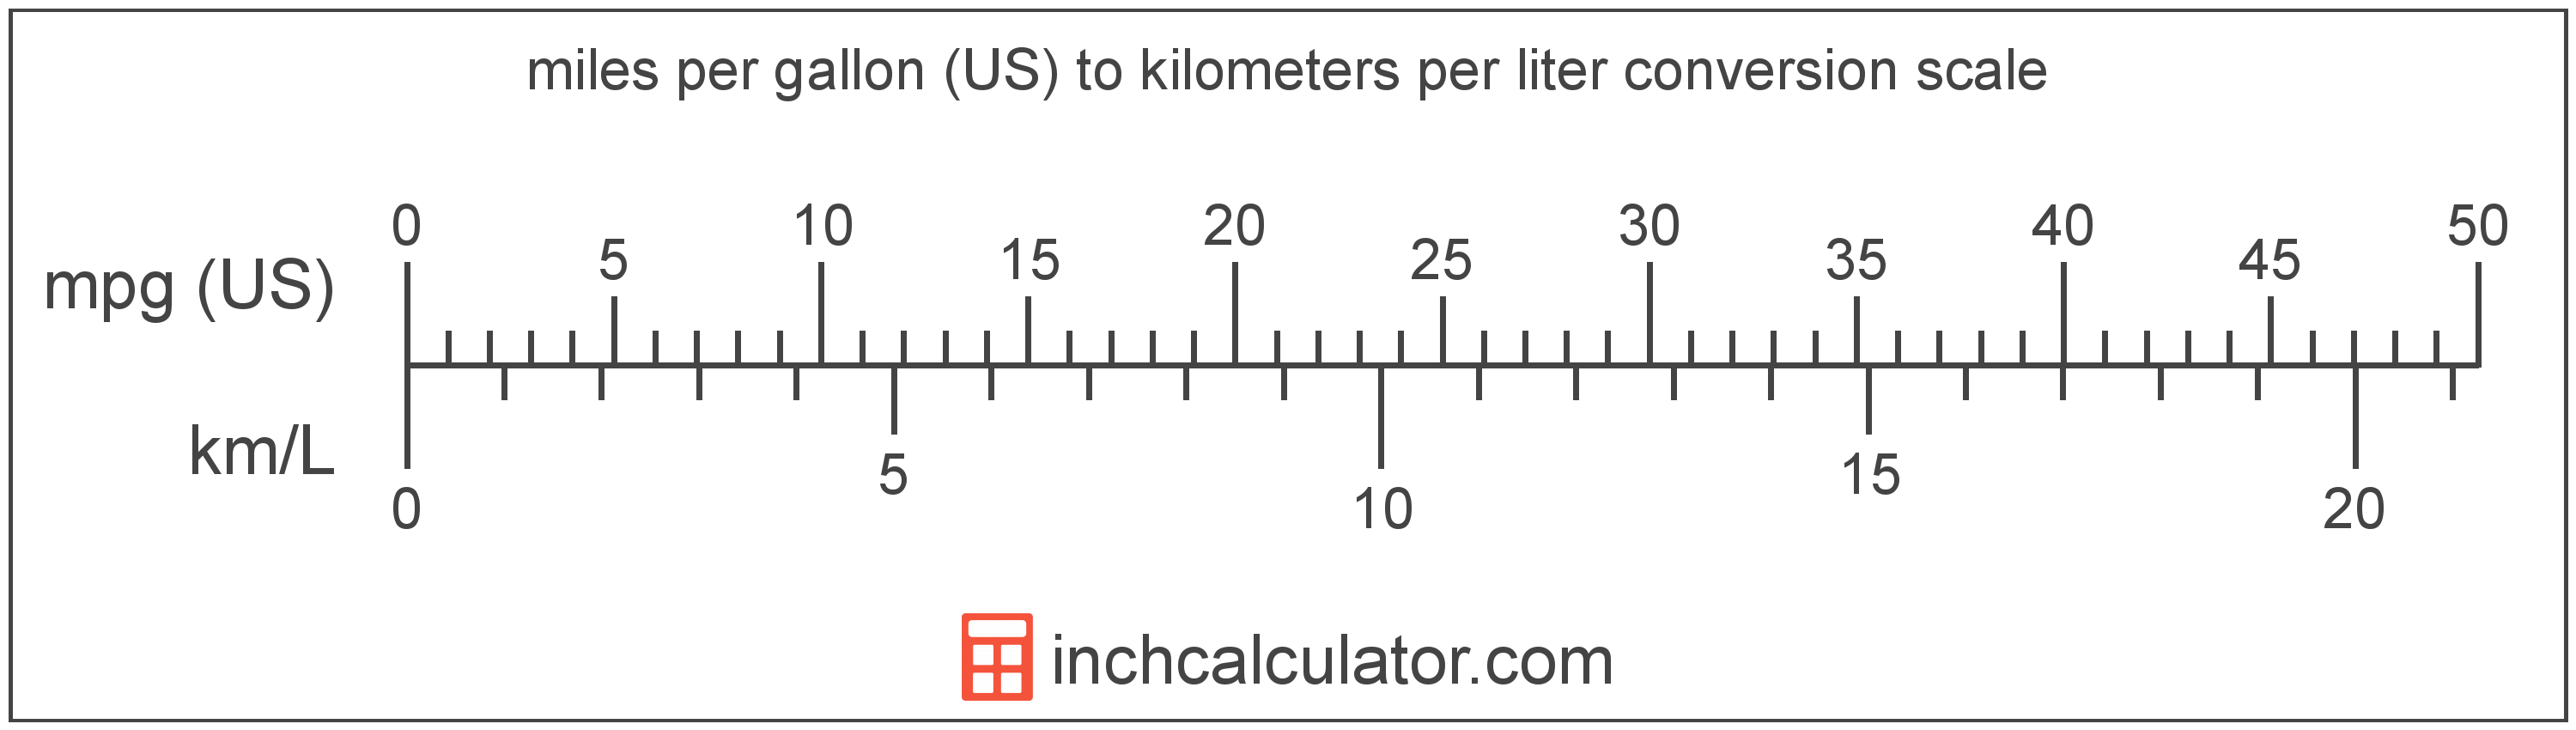 conversion scale showing miles per gallon (US) and equivalent kilometers per liter fuel economy values